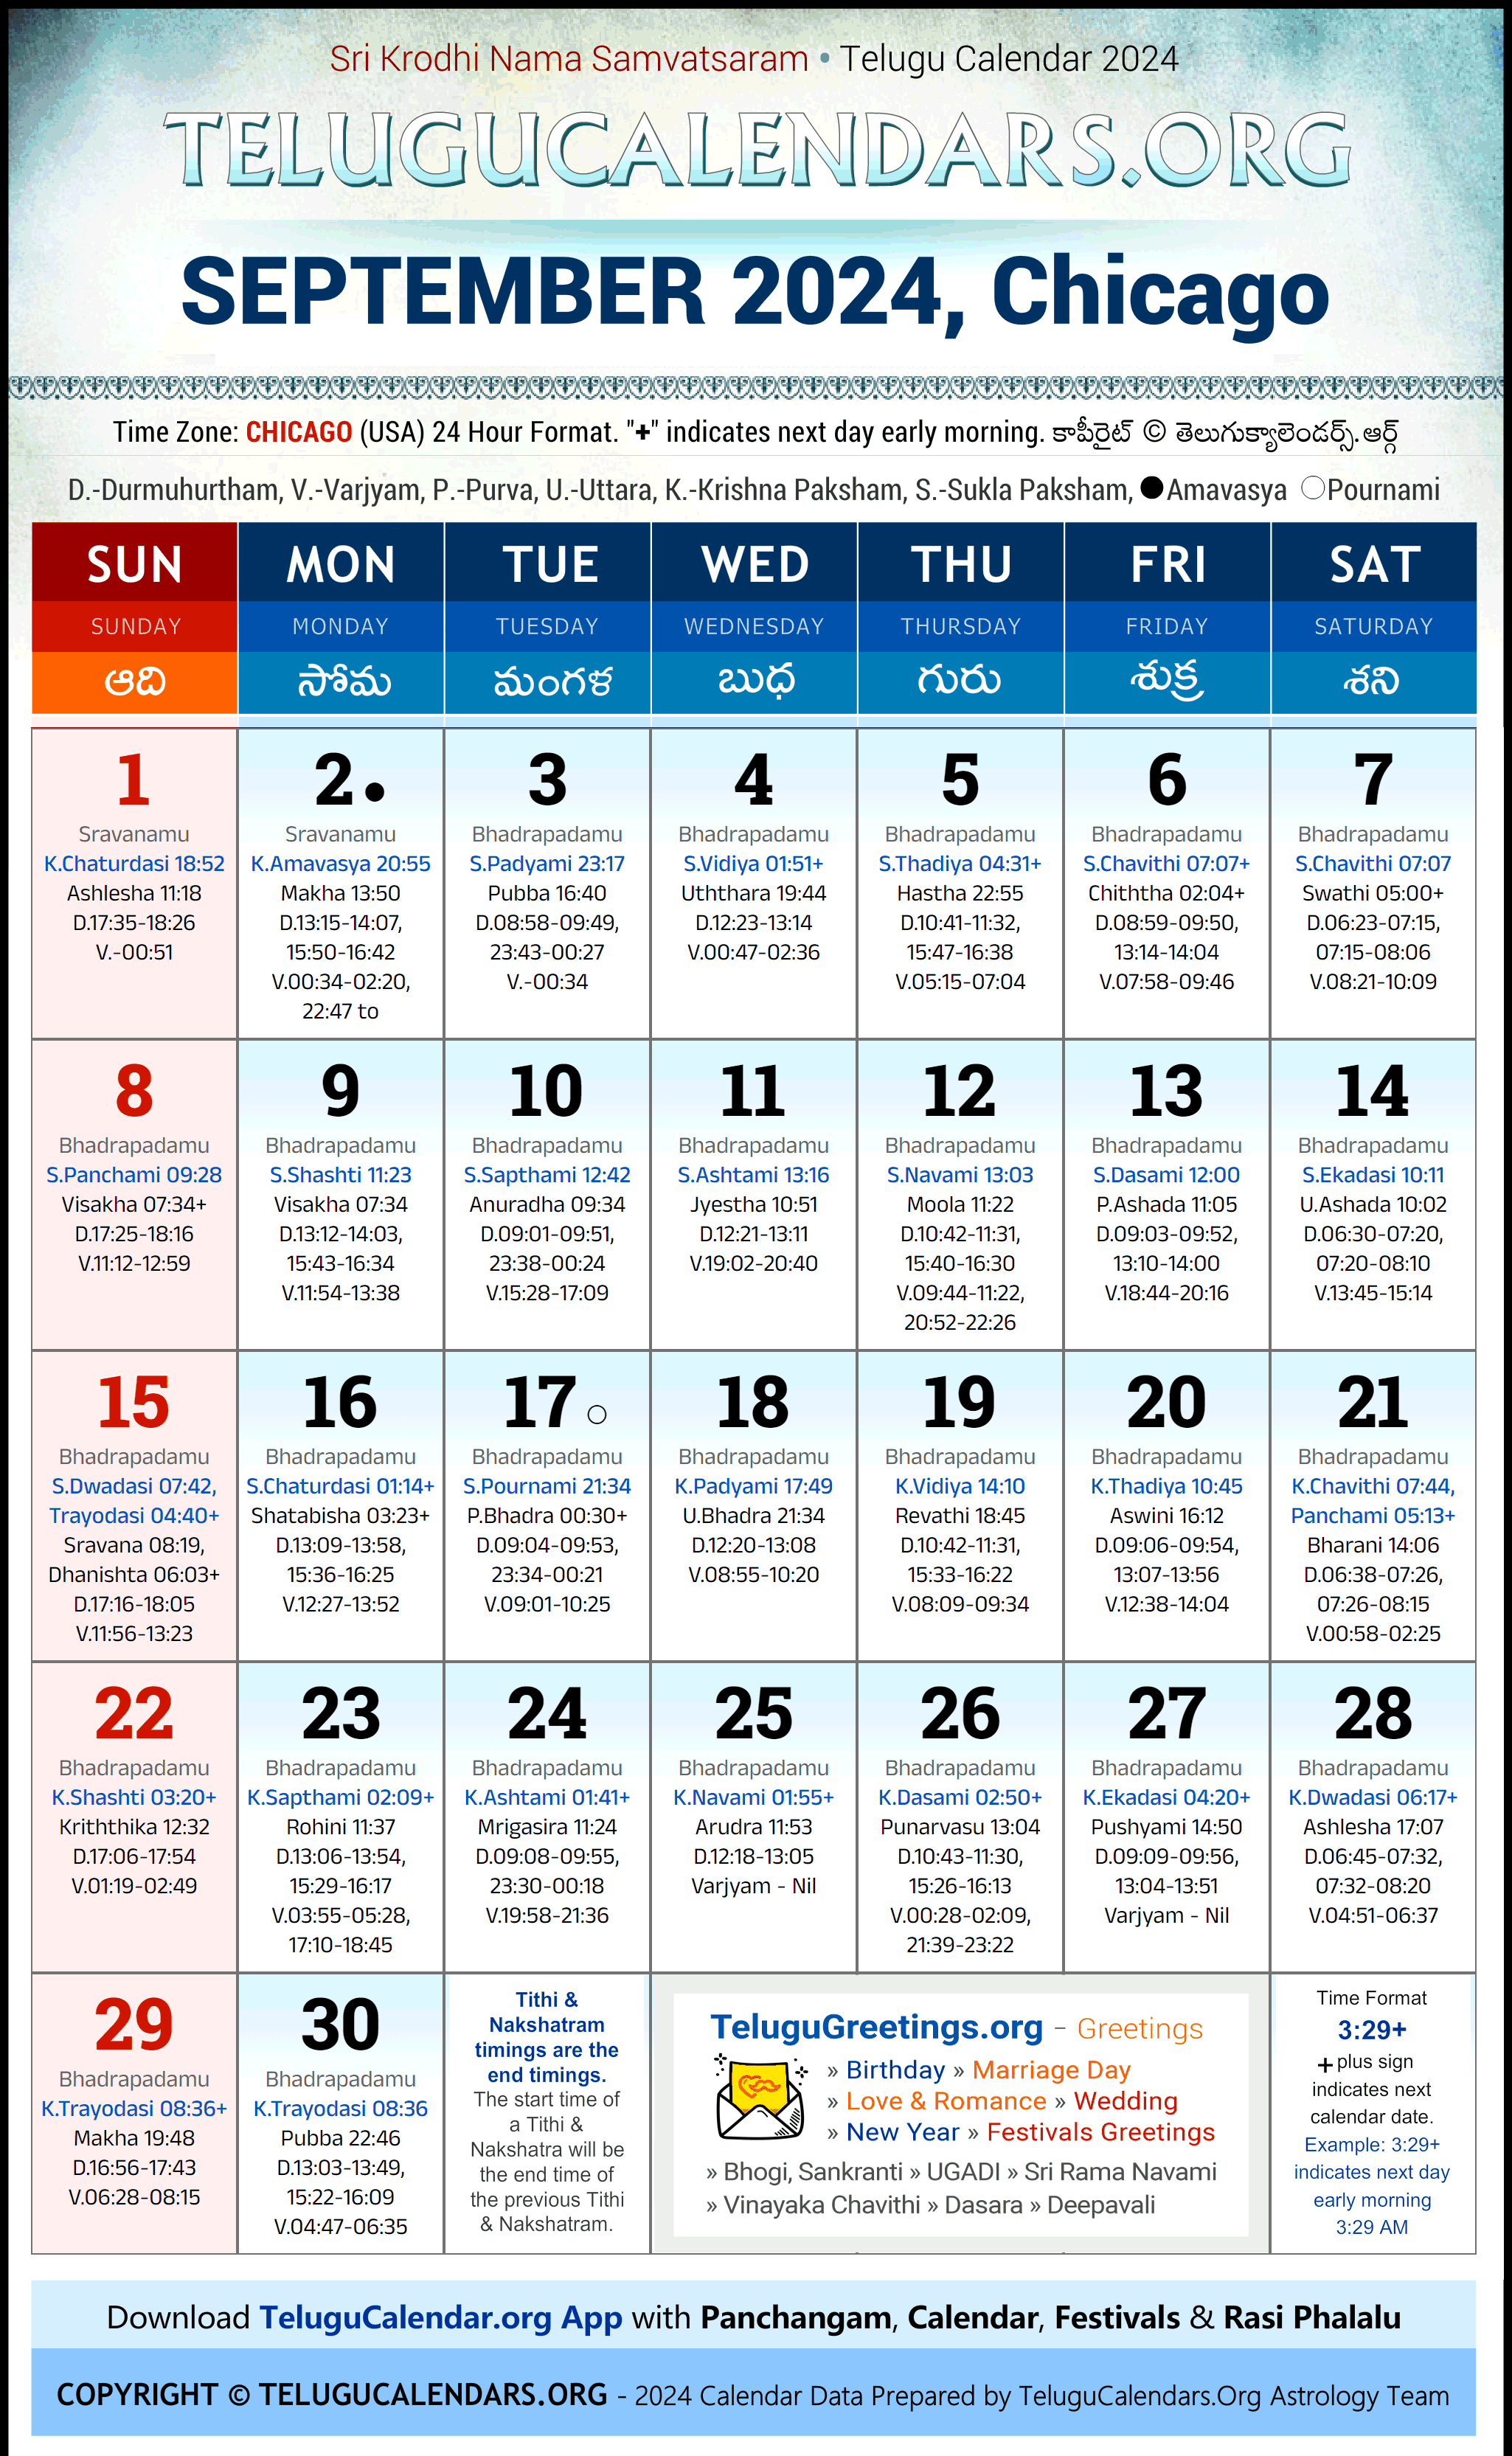 Telugu Calendar 2024 September Festivals for Chicago